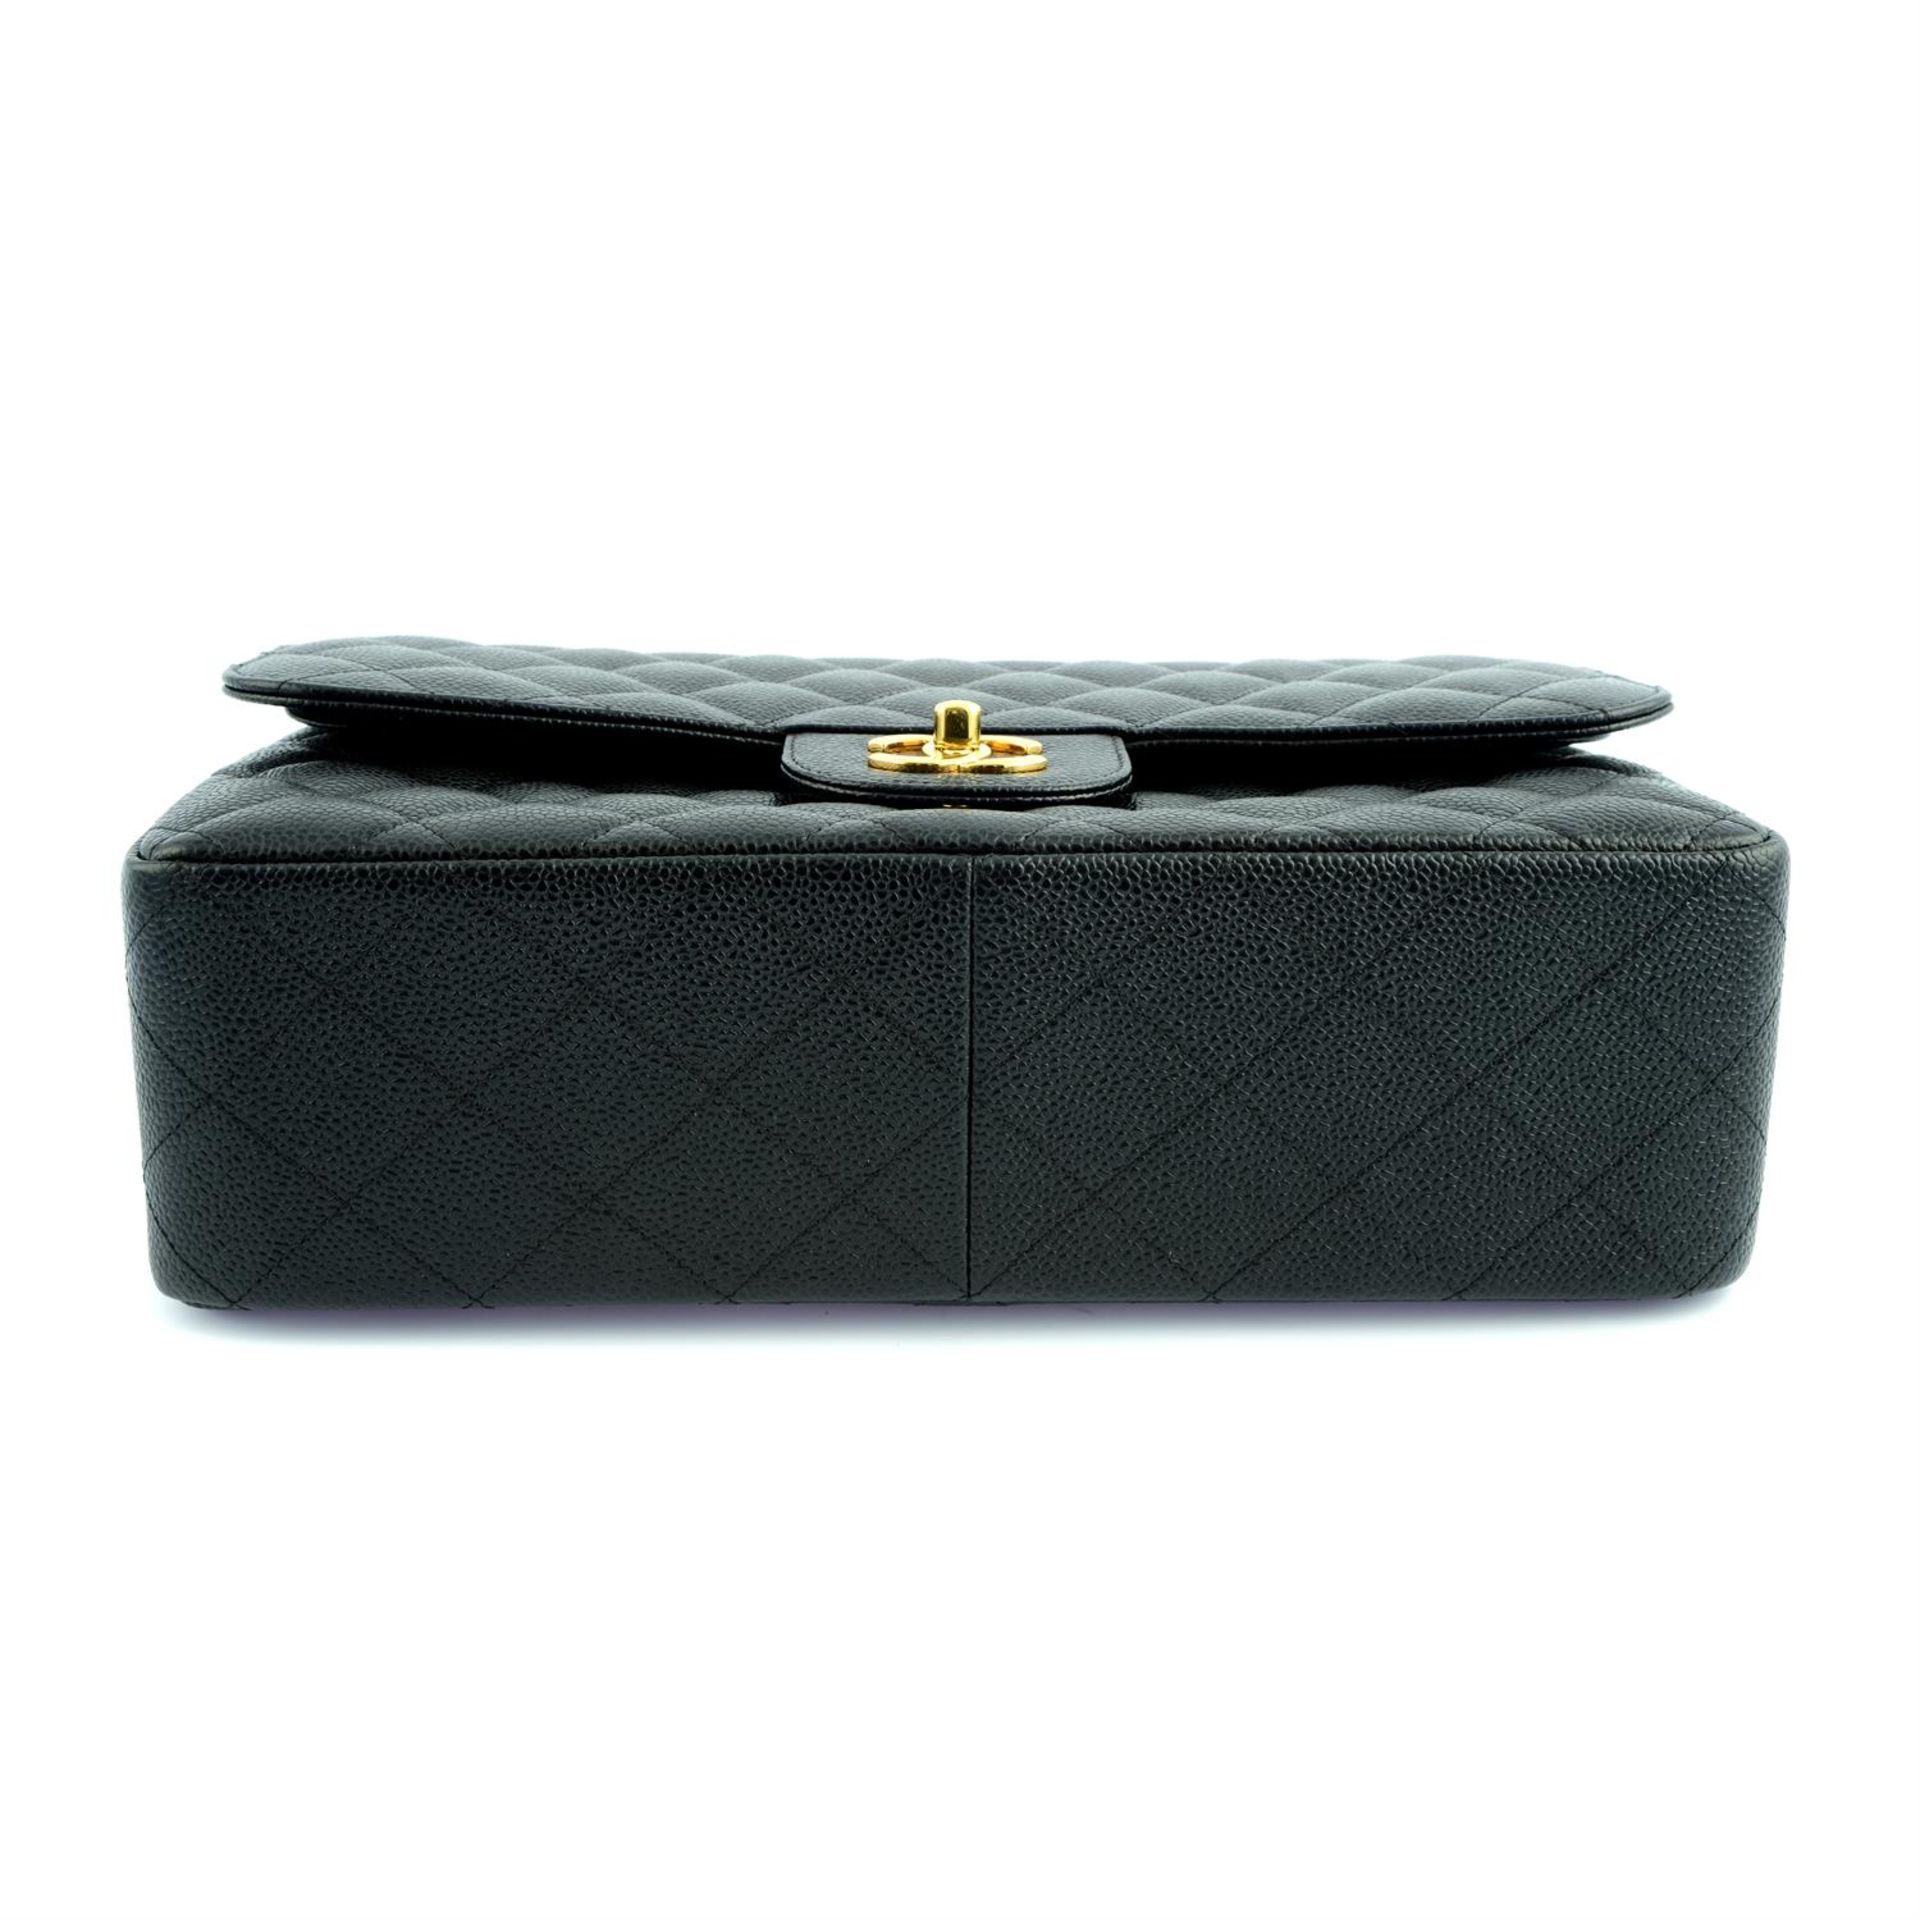 CHANEL - a black Caviar leather Jumbo Classic double flap handbag. - Image 4 of 6